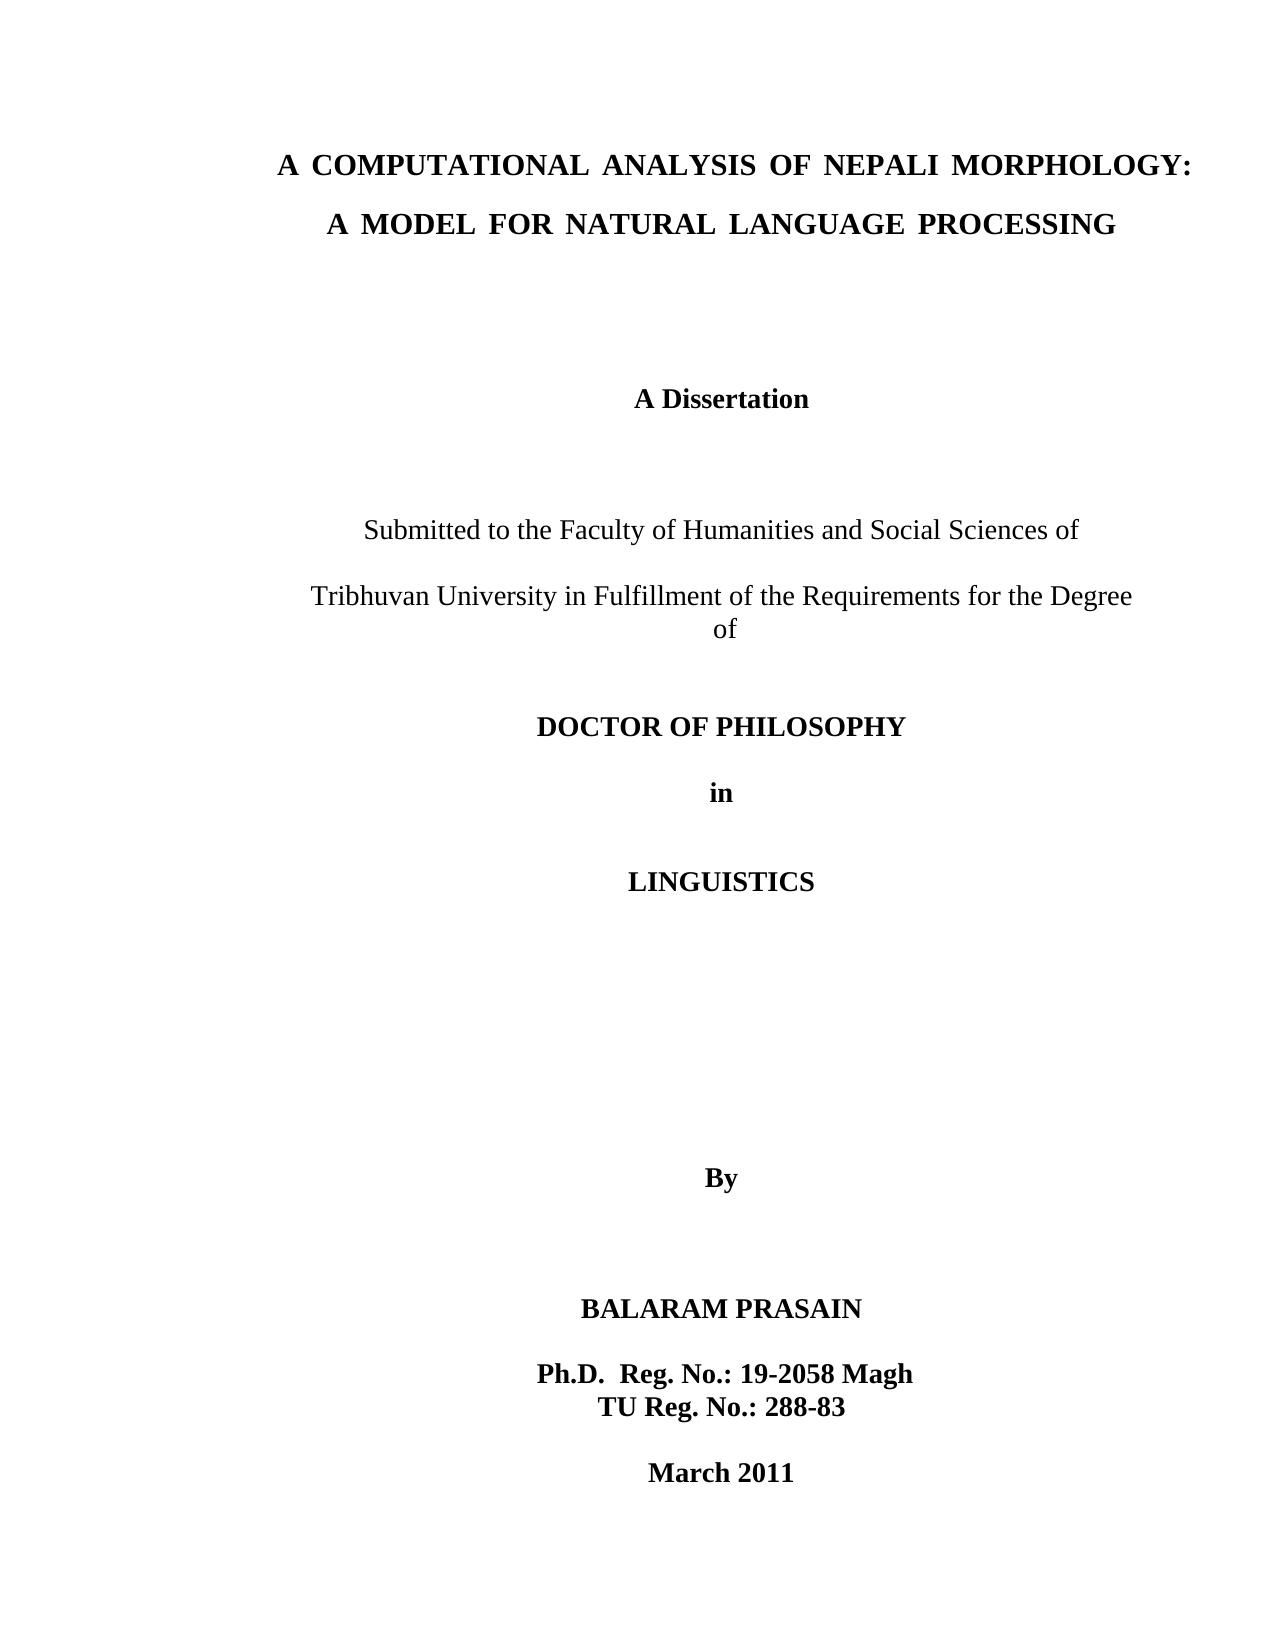 A Computational Analysis of Nepali Morphology: A Model for Natural Language Processing - Disertation